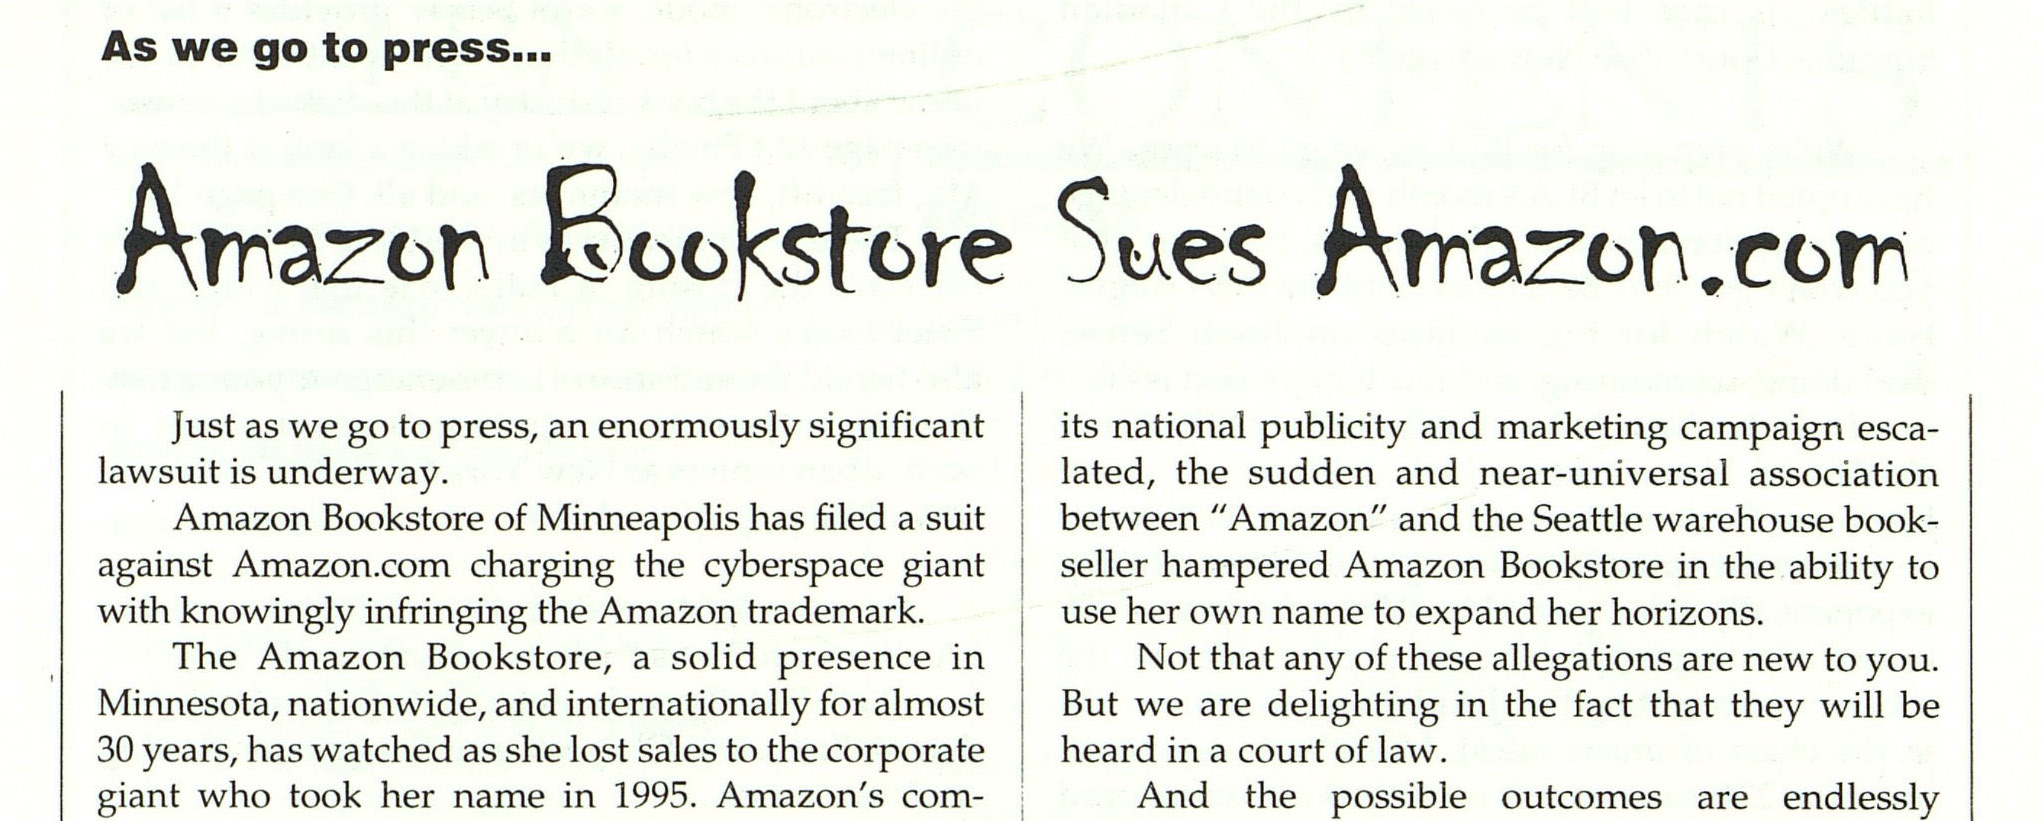 Article headline reads Amazon Bookstore Sues Amazon.com